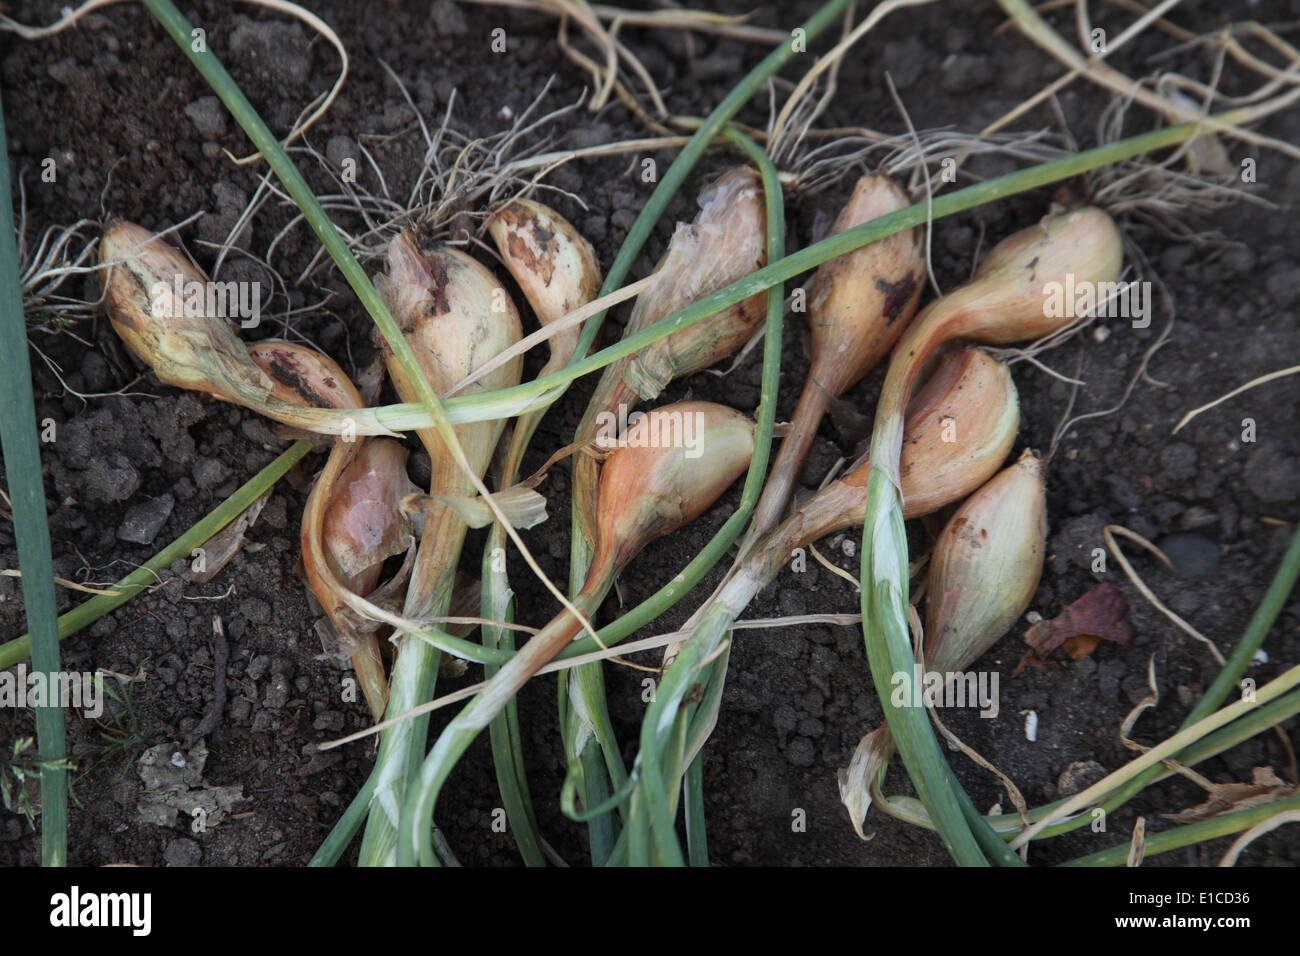 Allium Cepa "Jermor" Schalotte reife Birnen austrocknen Stockfoto